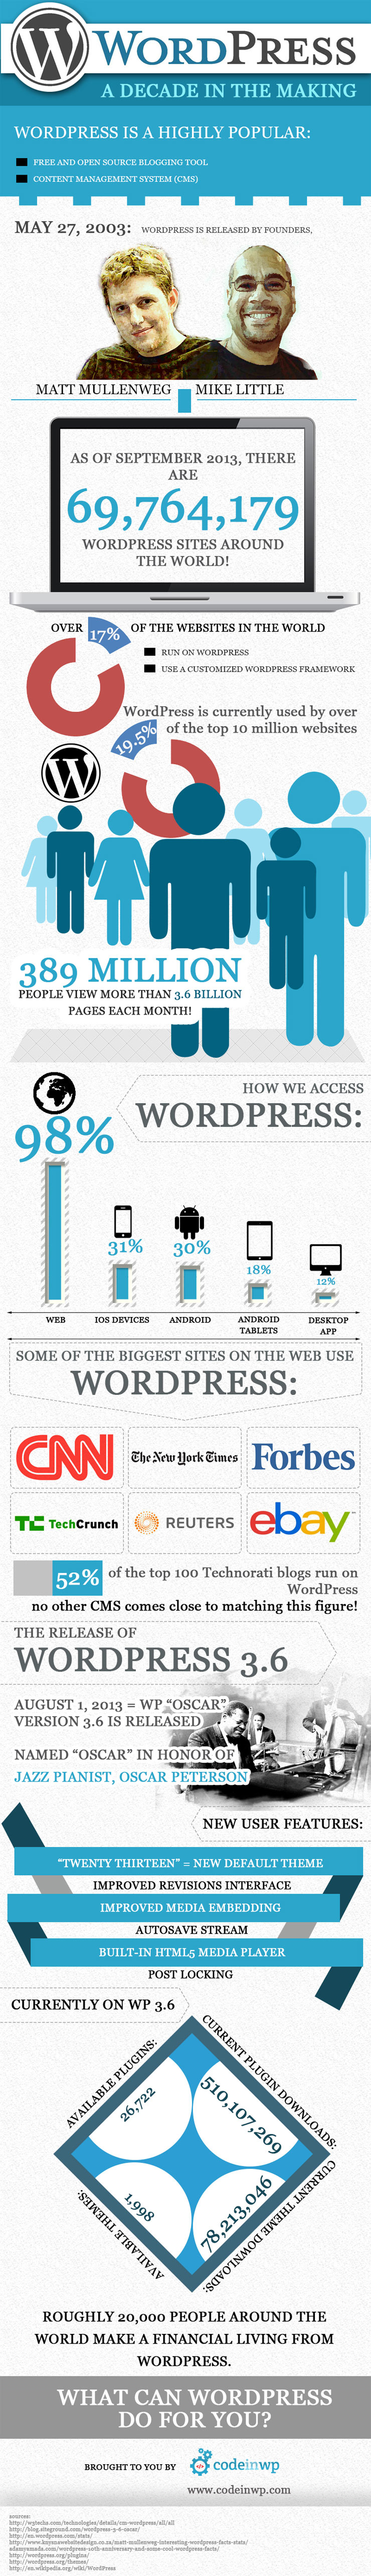 Wordpress Facts